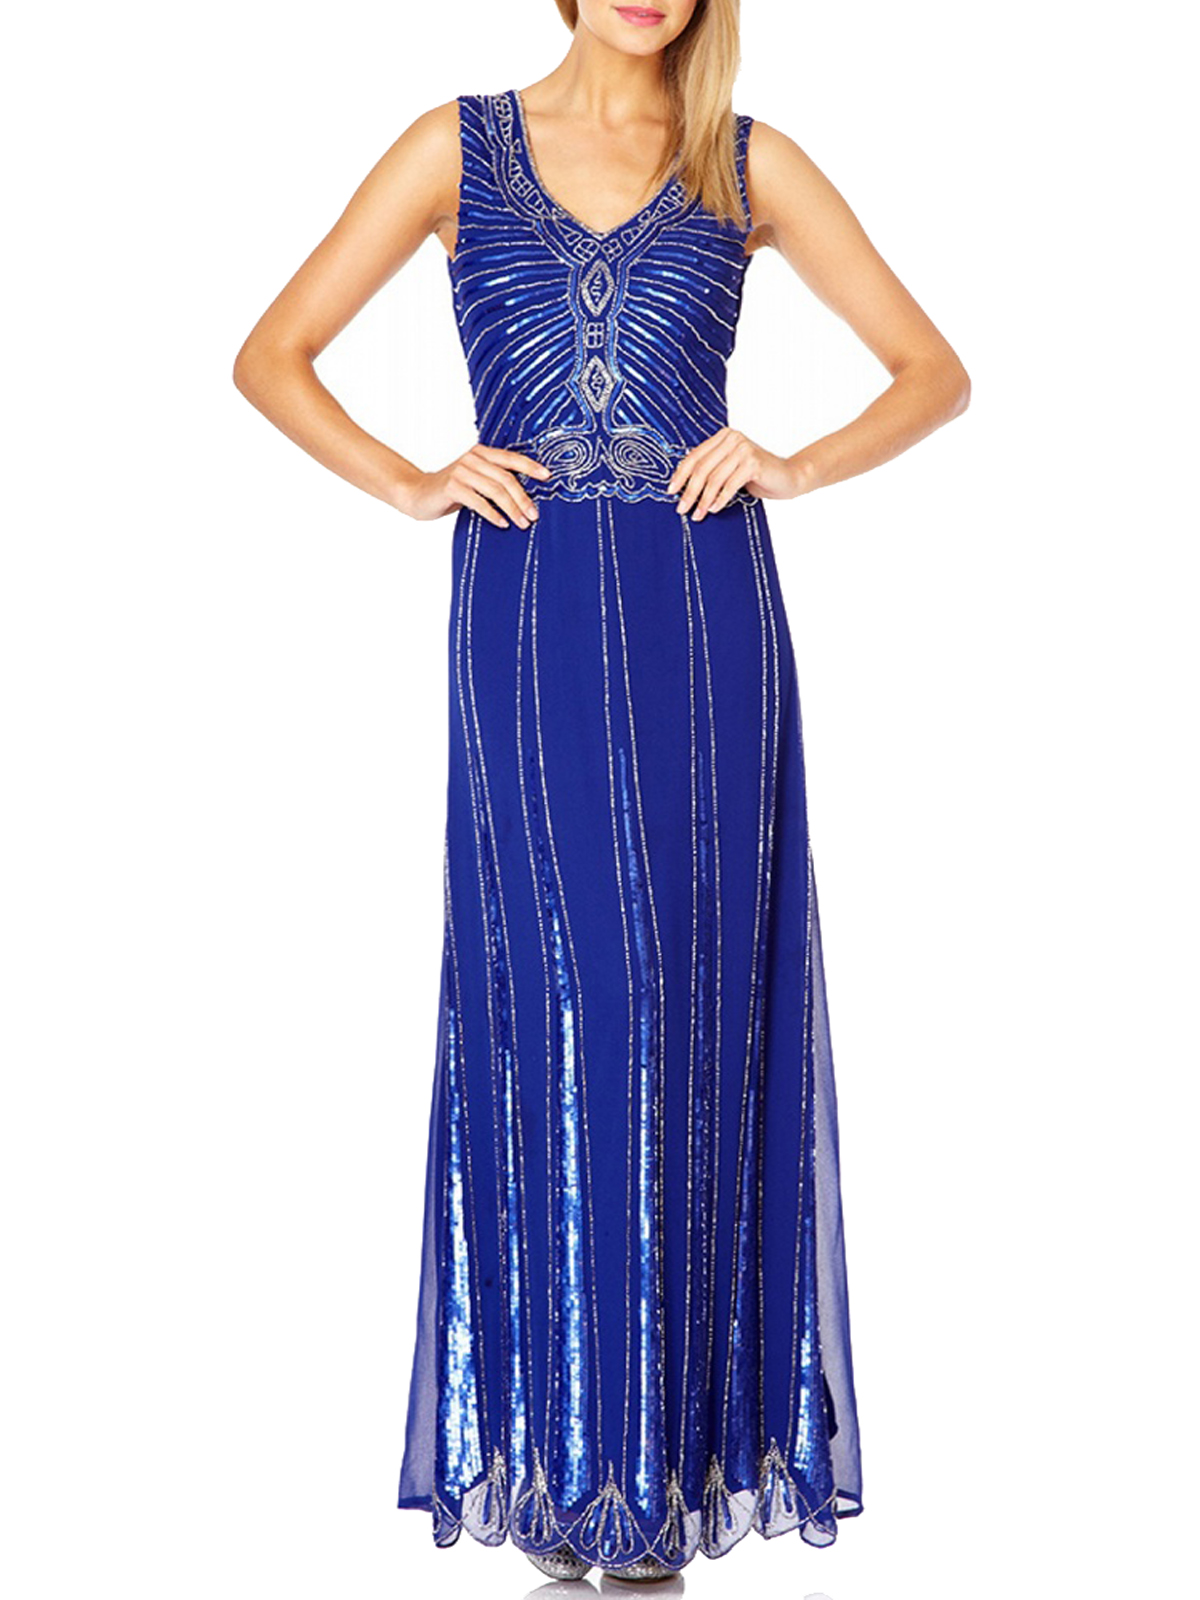 Quiz - - Quiz BLUE Embellished Chiffon Maxi Dress - Size 8 to 18